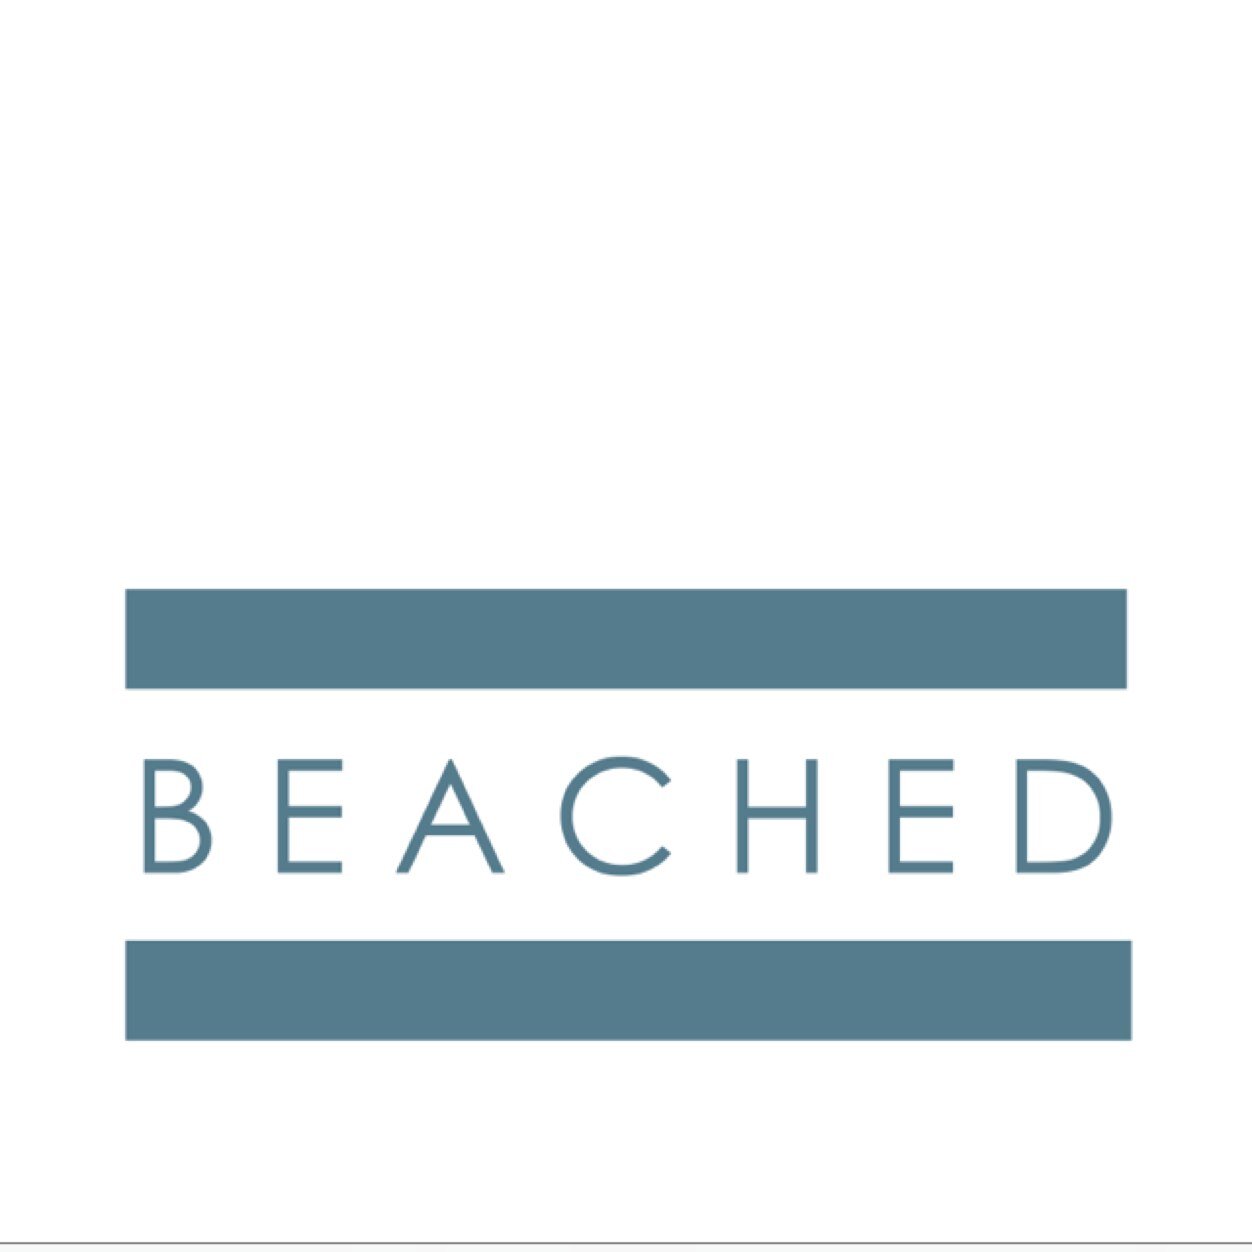 Coastal Home Decor ~ Bath & Body | Beach Haven | LBI | 609.848.5362 | 510 N. Bay Ave. Beach Haven, NJ | In the Victoria Rose 🌹| beachedlbi@gmail.com